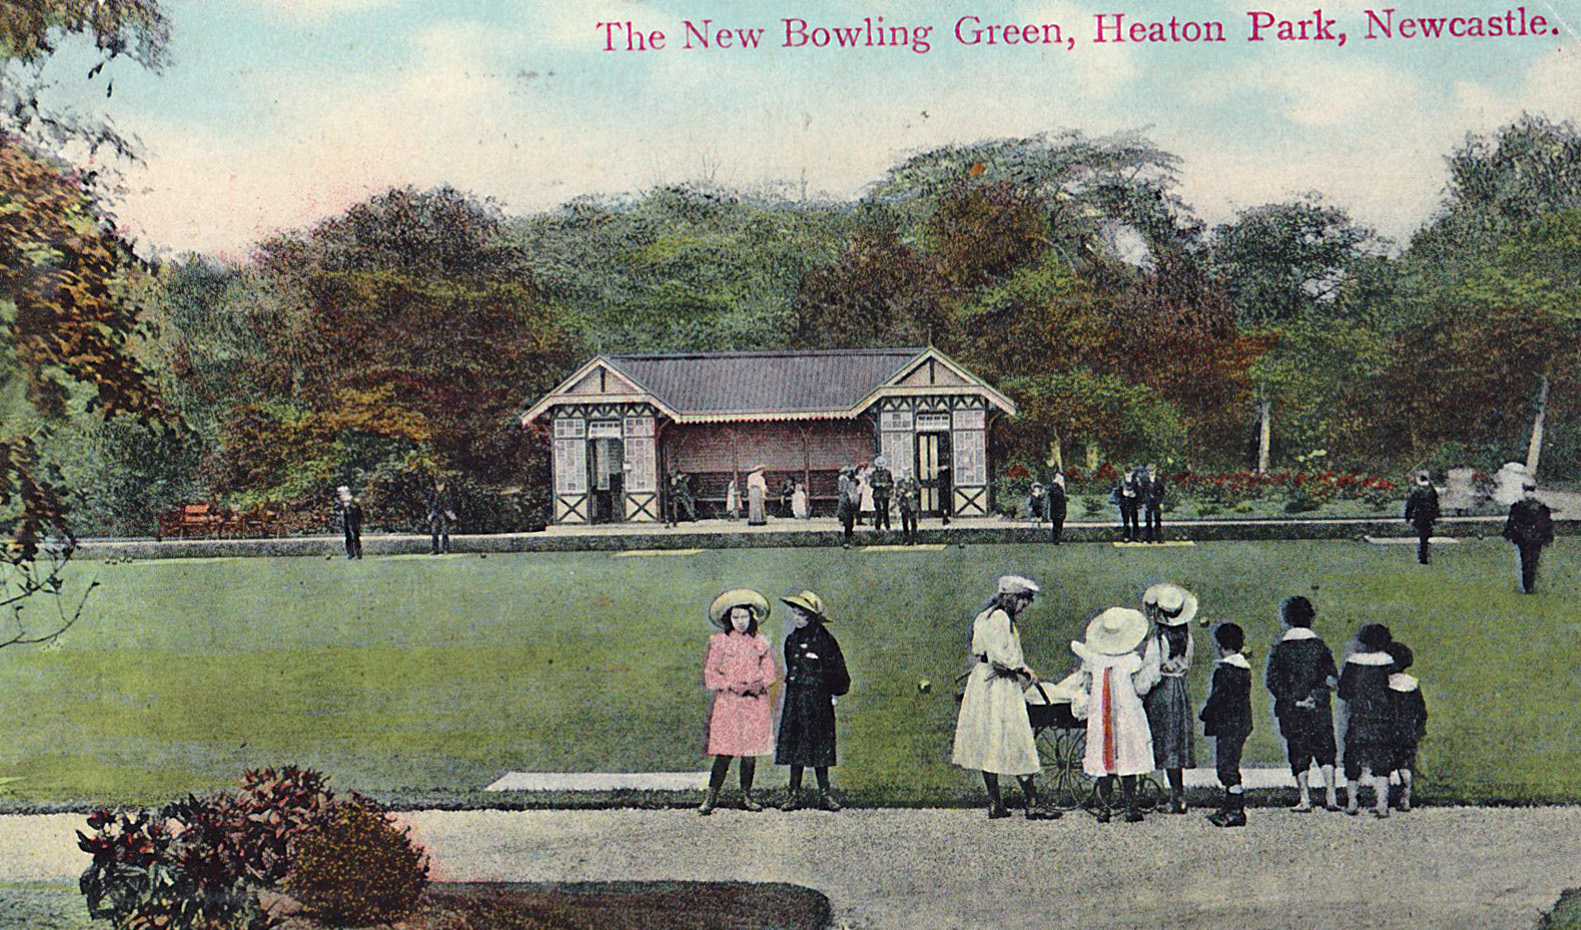 Bowling green, Heaton Park